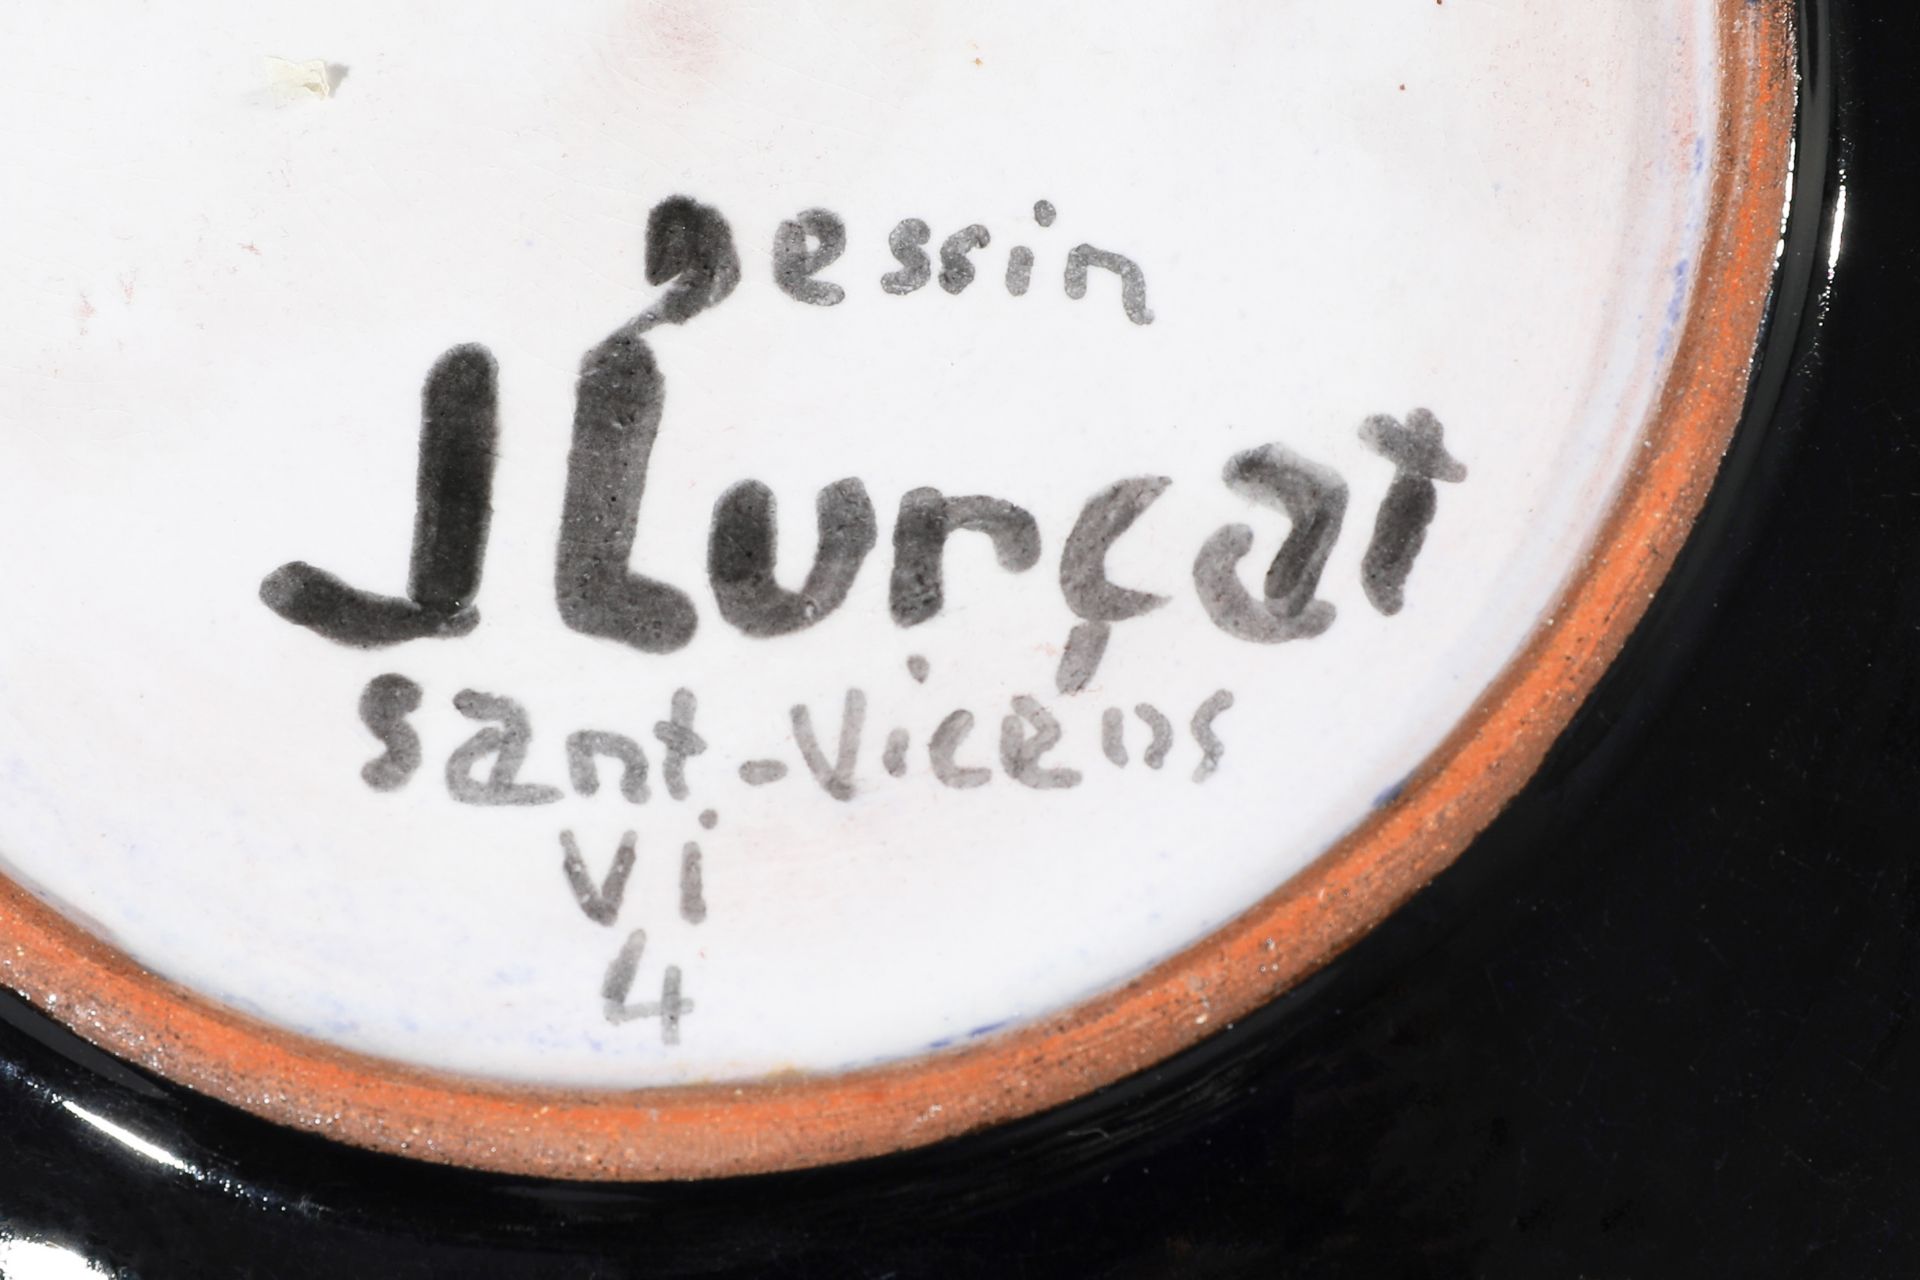 Jean Lurçat, 6 Artist Plates, ceramics - Image 5 of 5